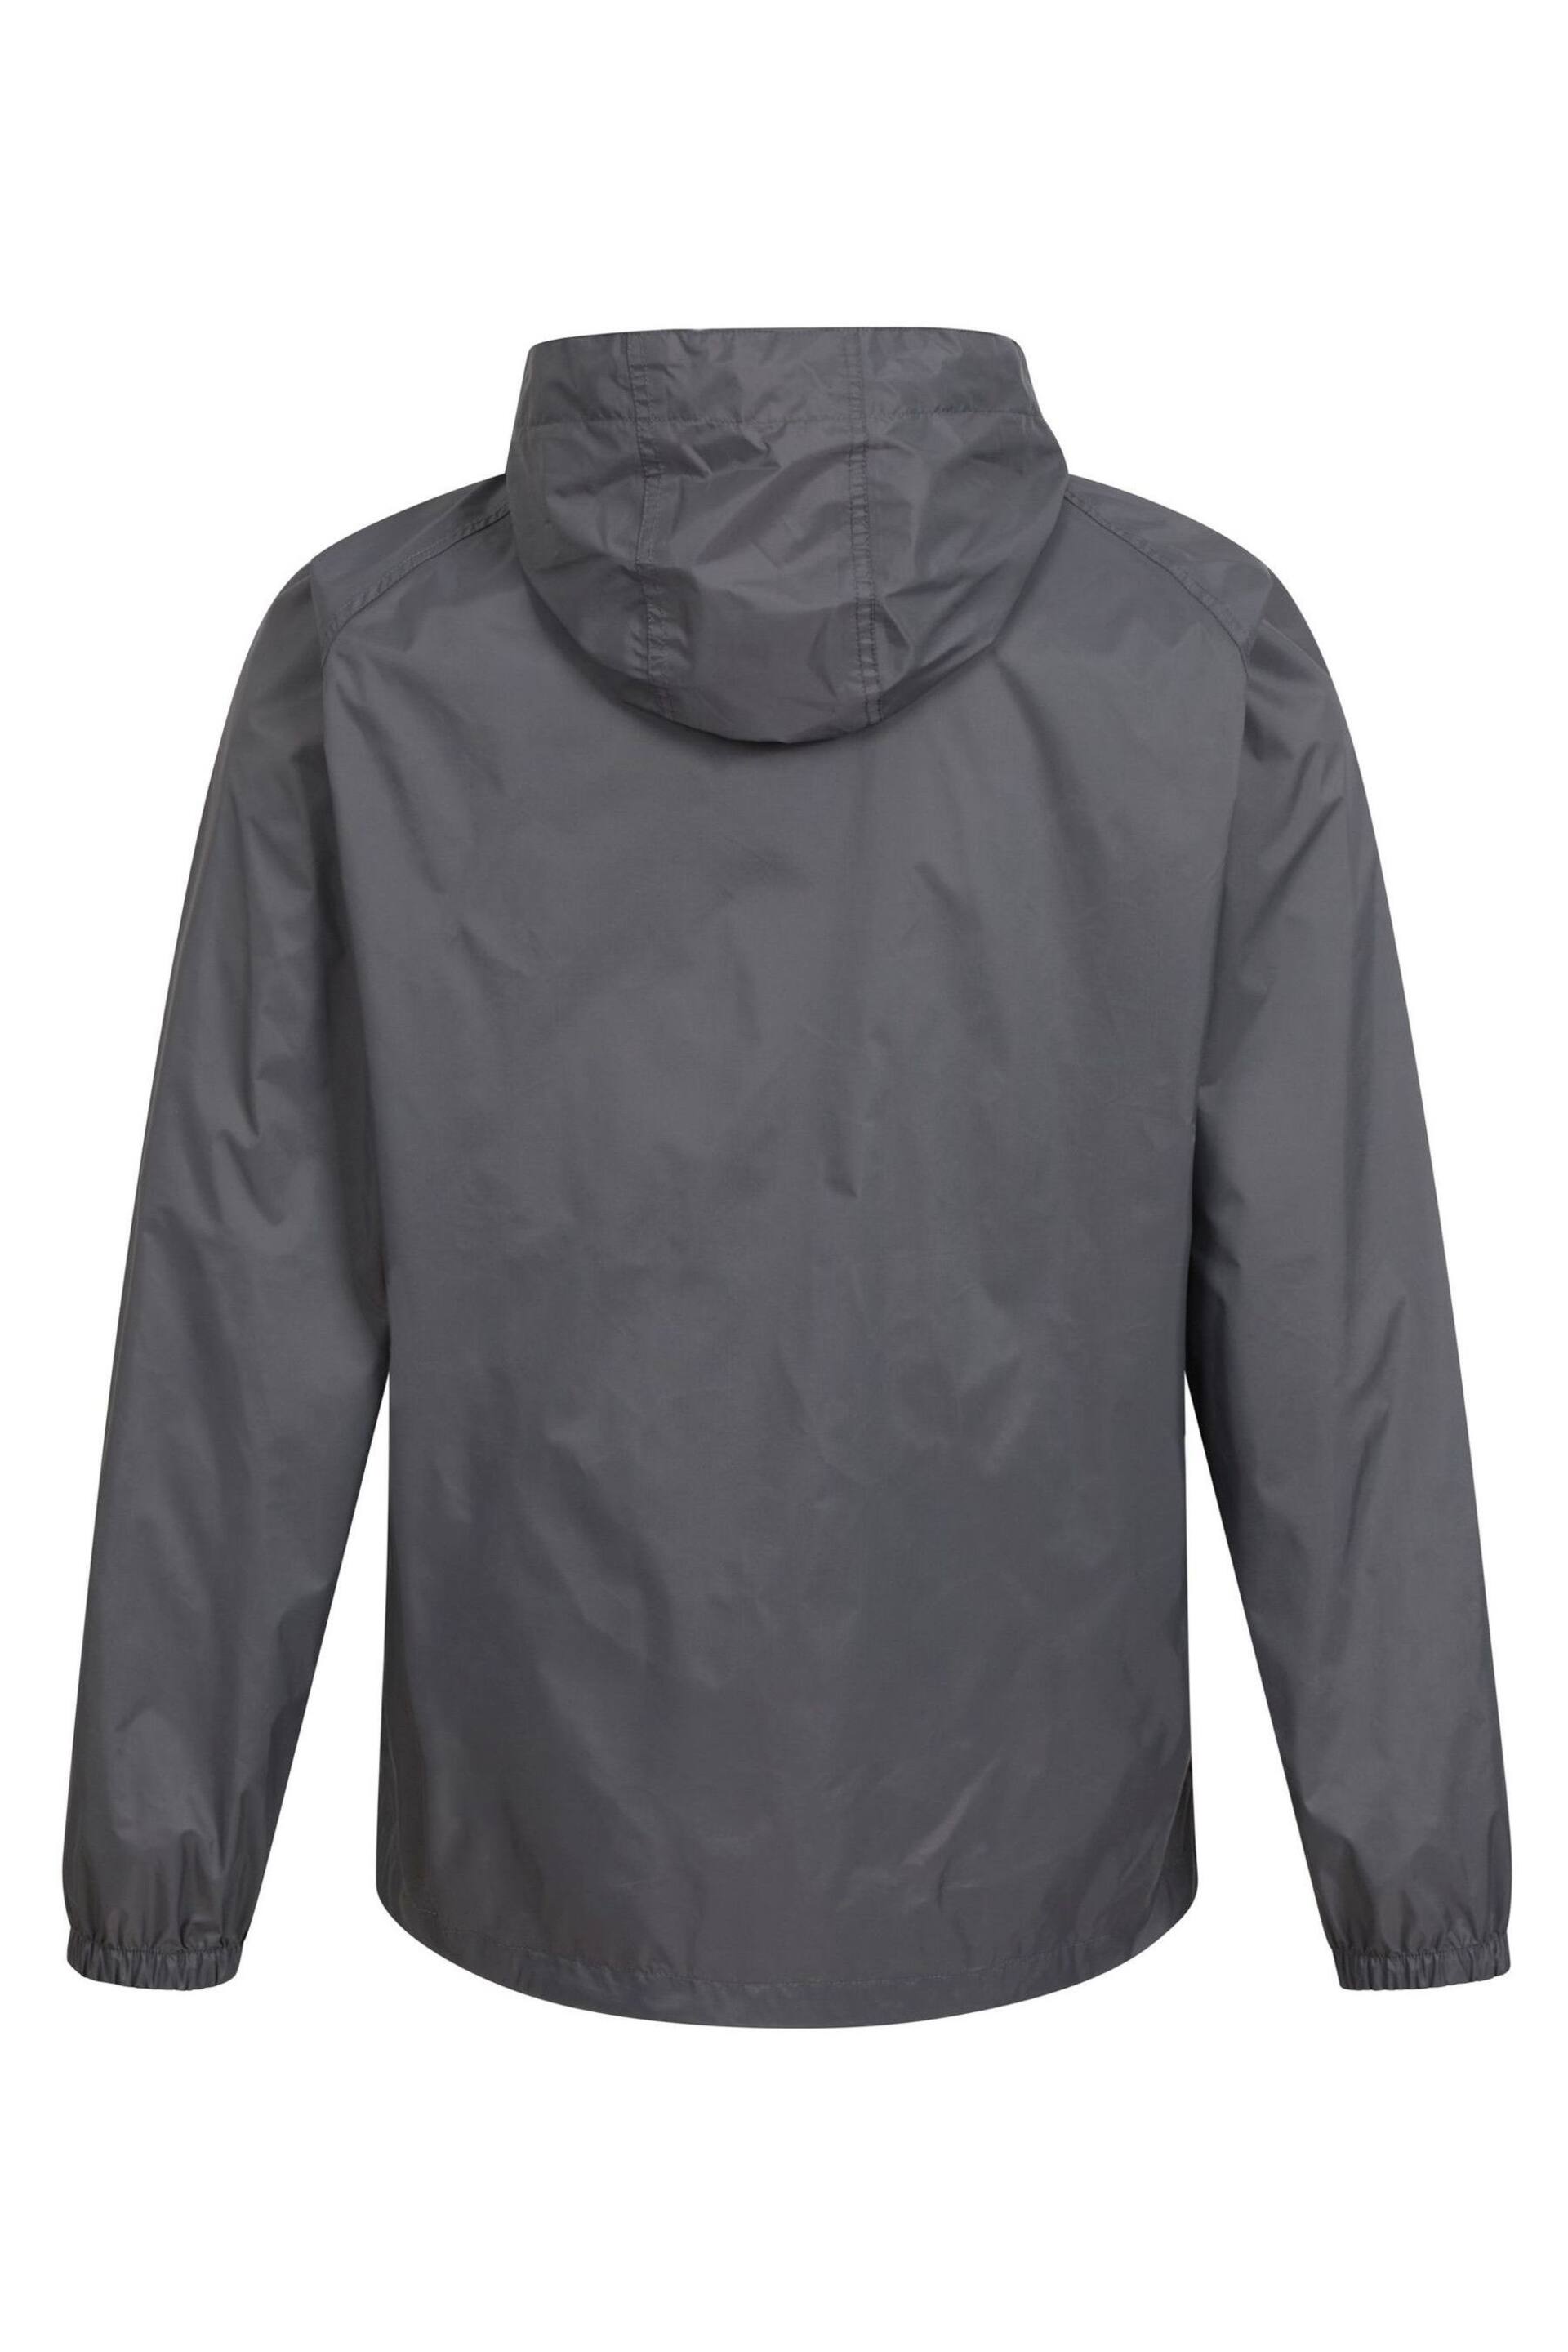 Mountain Warehouse Grey Pakka Waterproof Jacket - Mens - Image 3 of 5